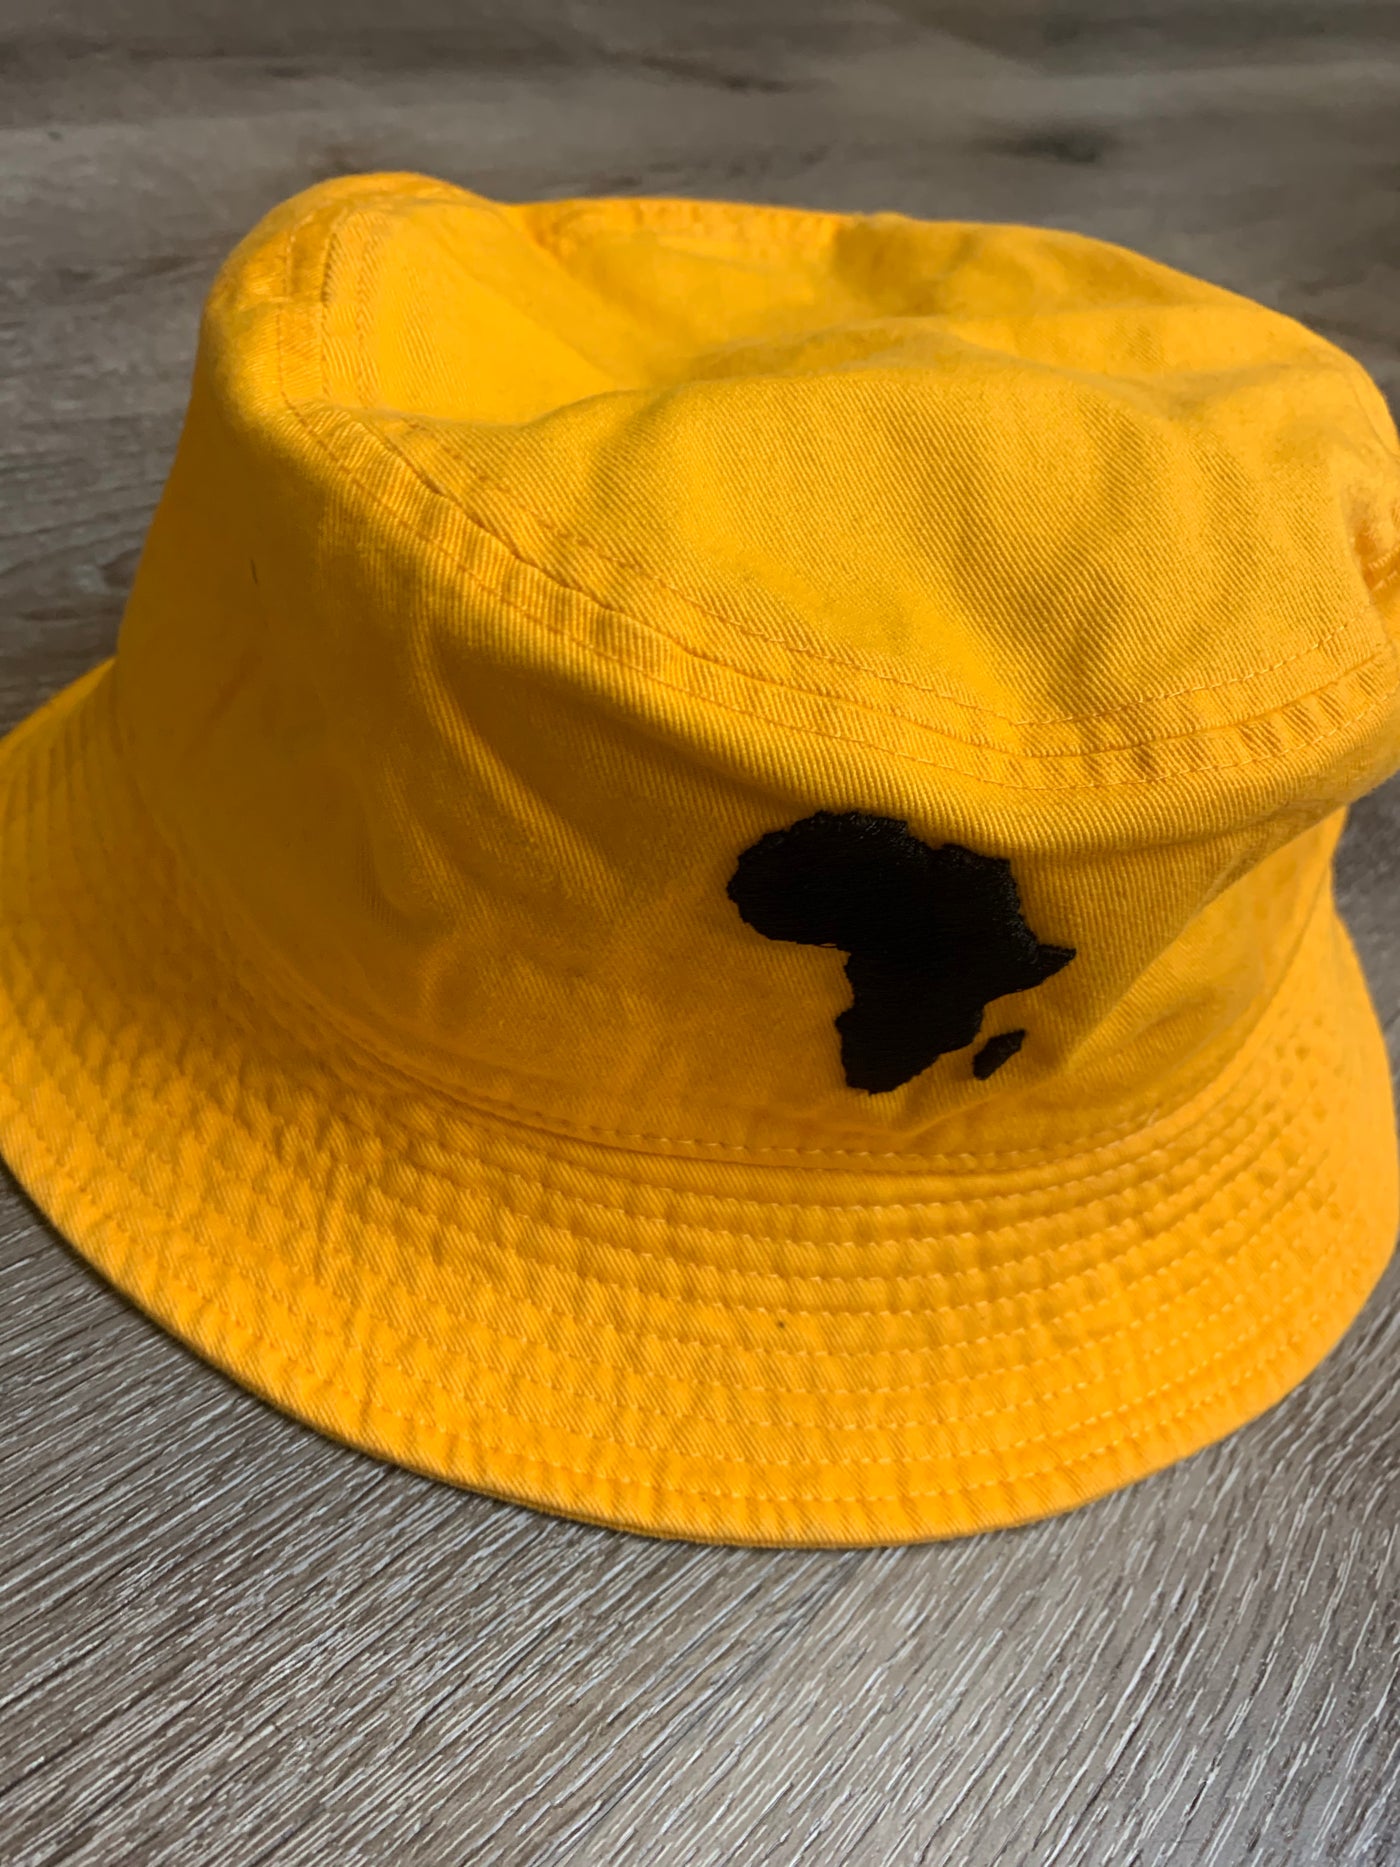 Africa Map Hoodie & Bucket Hat